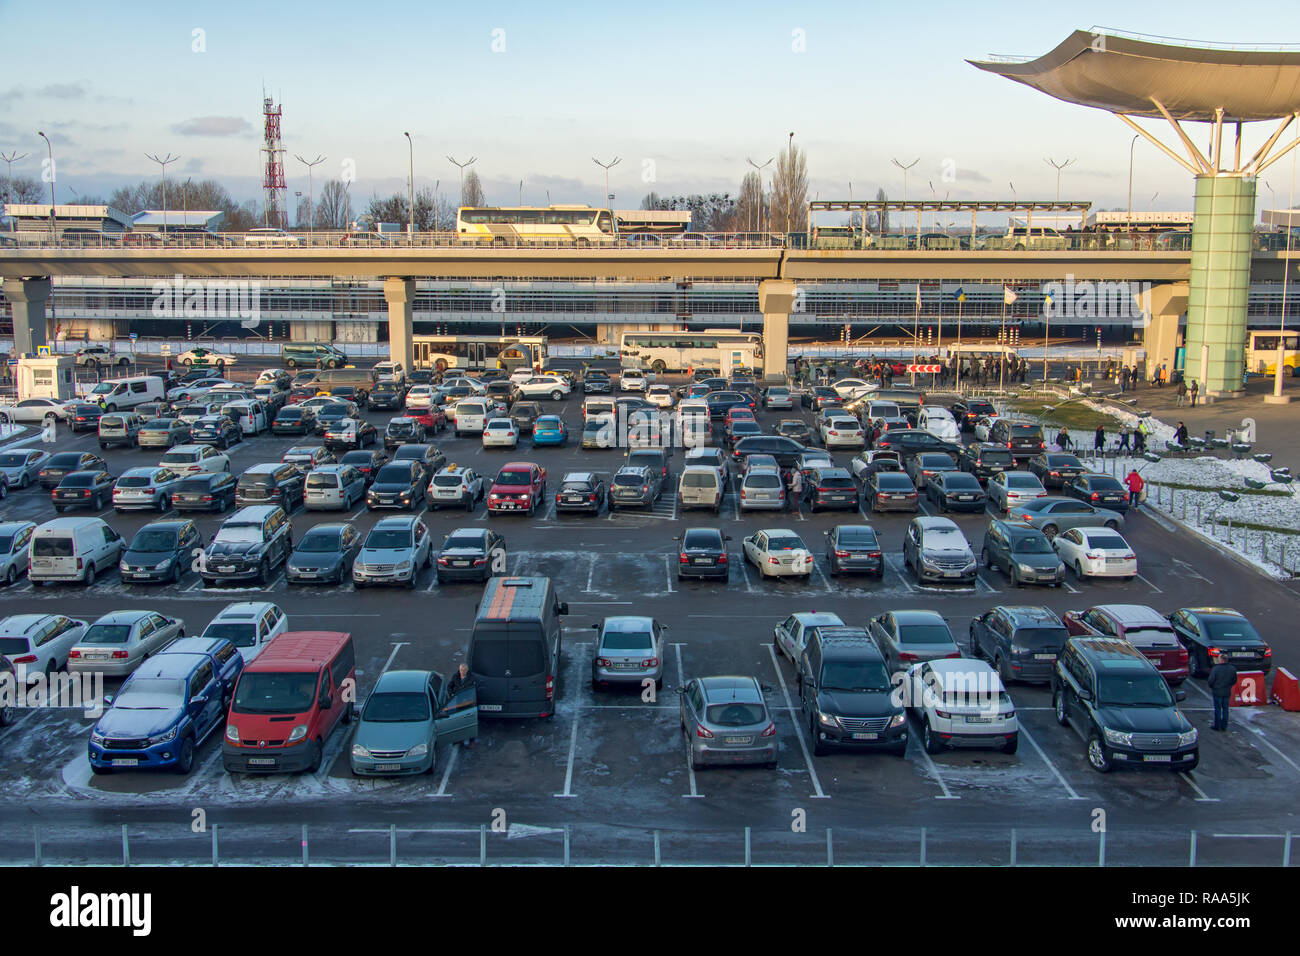 KIEV, UKRAINE, NOV 28 2018, Parking lot is full of cars at The Boryspil airport Stock Photo